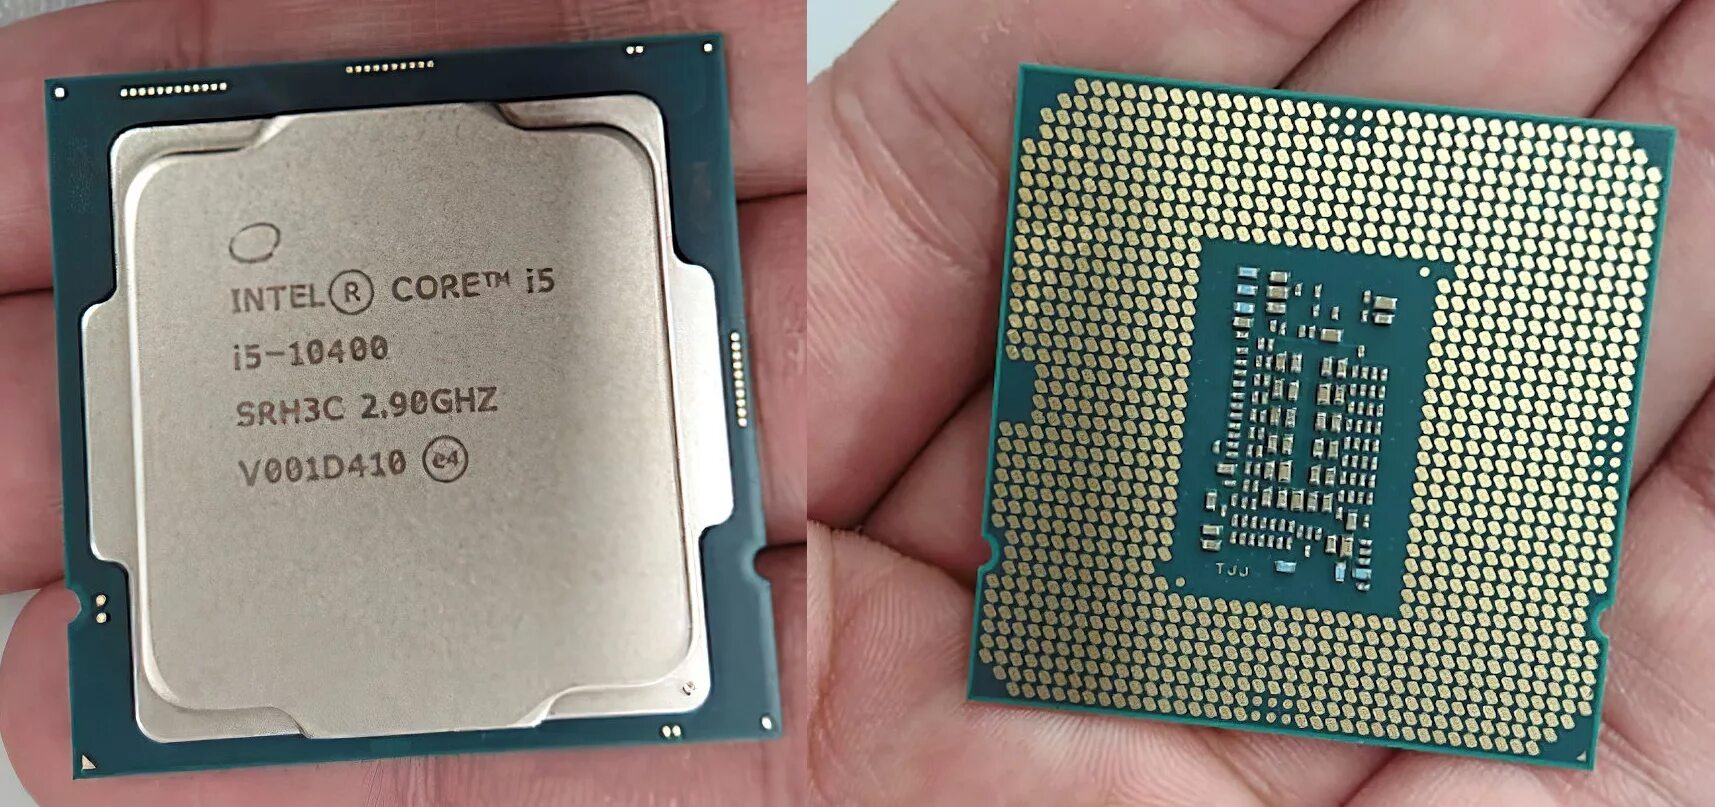 Intel r 4 series. Процессор Intel Core i5-10400. Процессор Intel Core i5 12400f. Процессор Intel Core i5-10400f OEM. Процессор Intel Core i5 Comet Lake i5-10400f OEM.